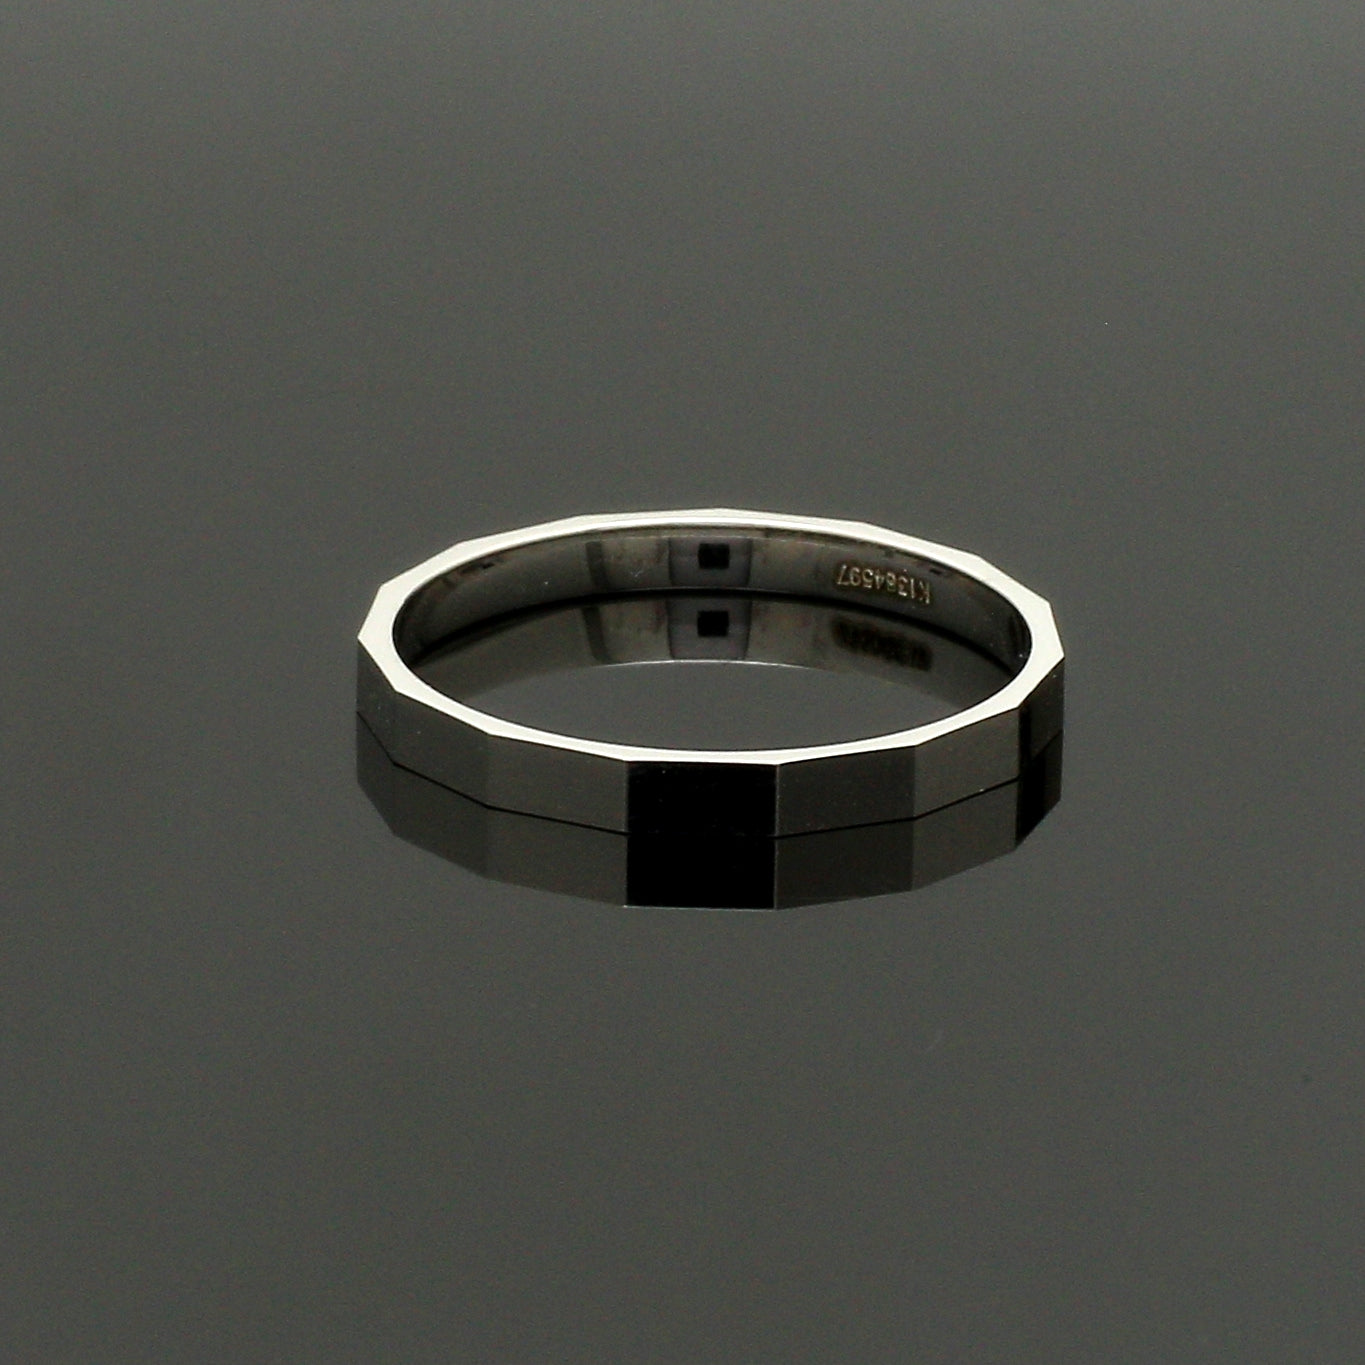 2mm Designer Japanese Platinum Ring for Women JL PT 1335   Jewelove